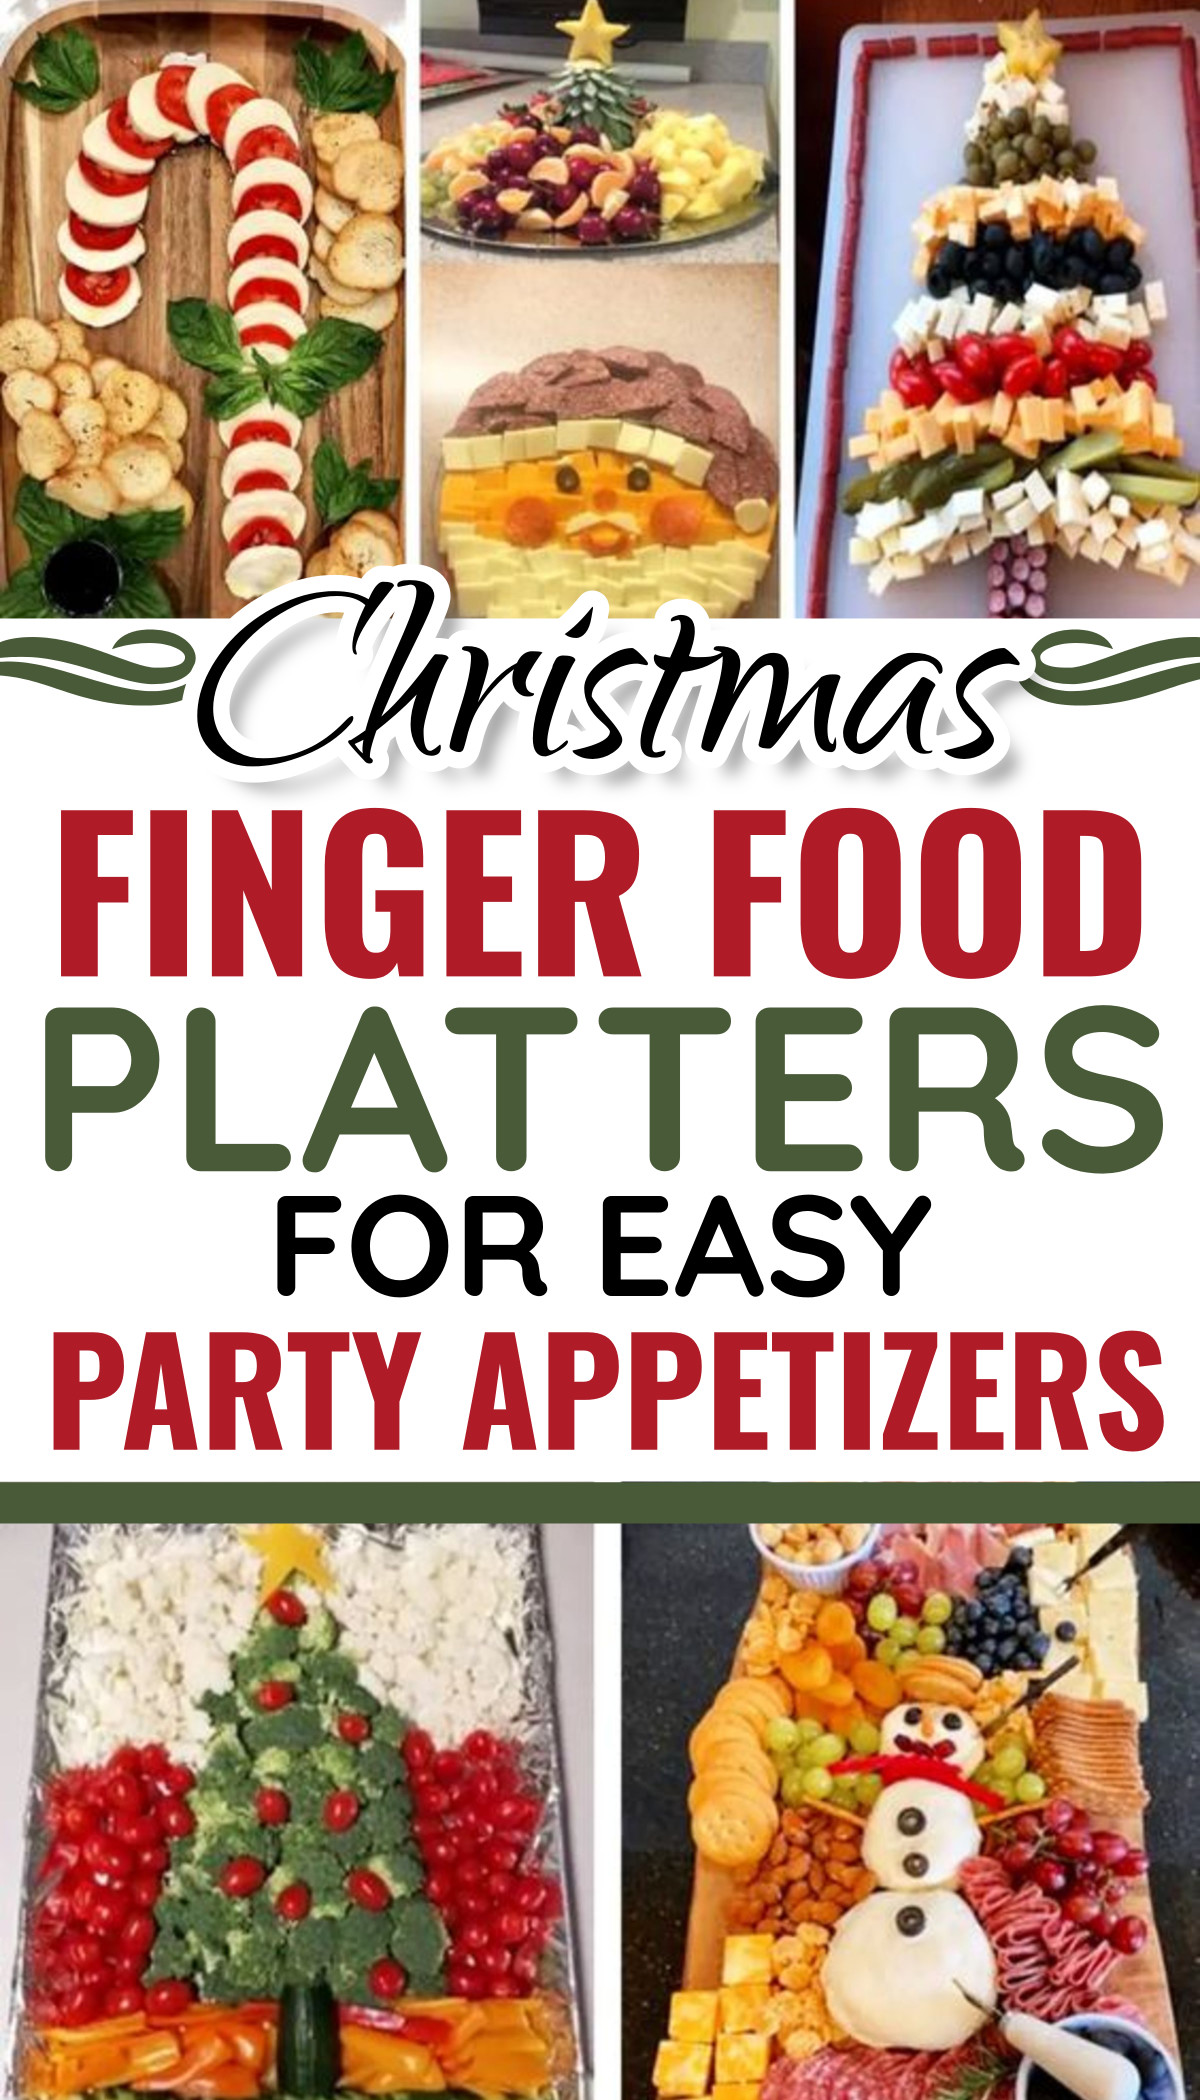 Christmas finger food platters ideas